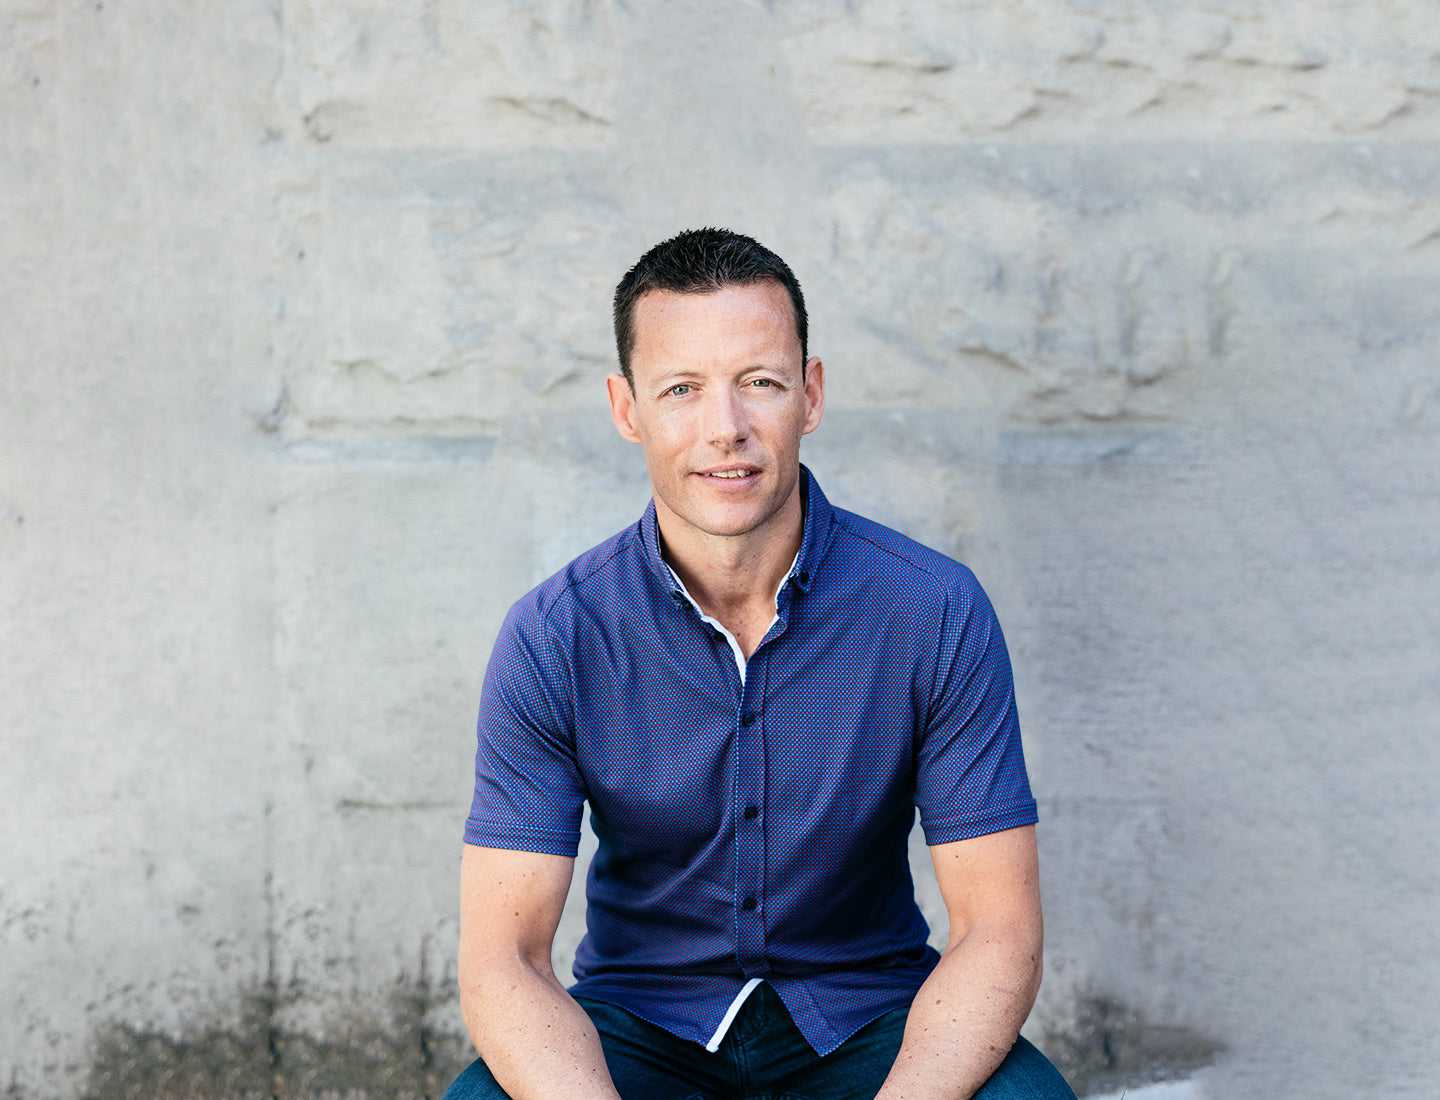 Form CEO Dan Eisenhardt, wearing a blue shirt, sitting down against a concrete wall